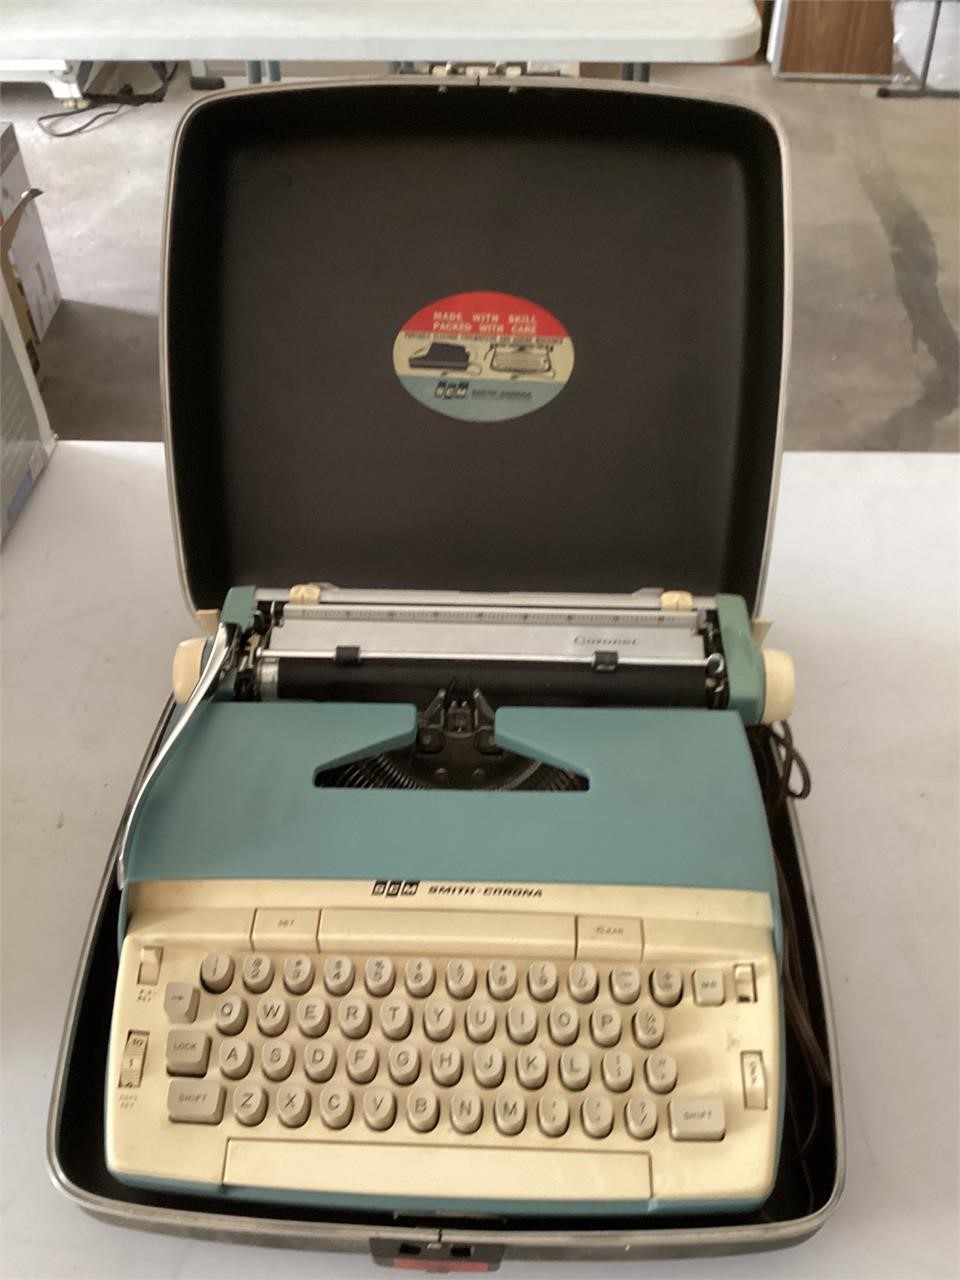 Smith corona type writer with case